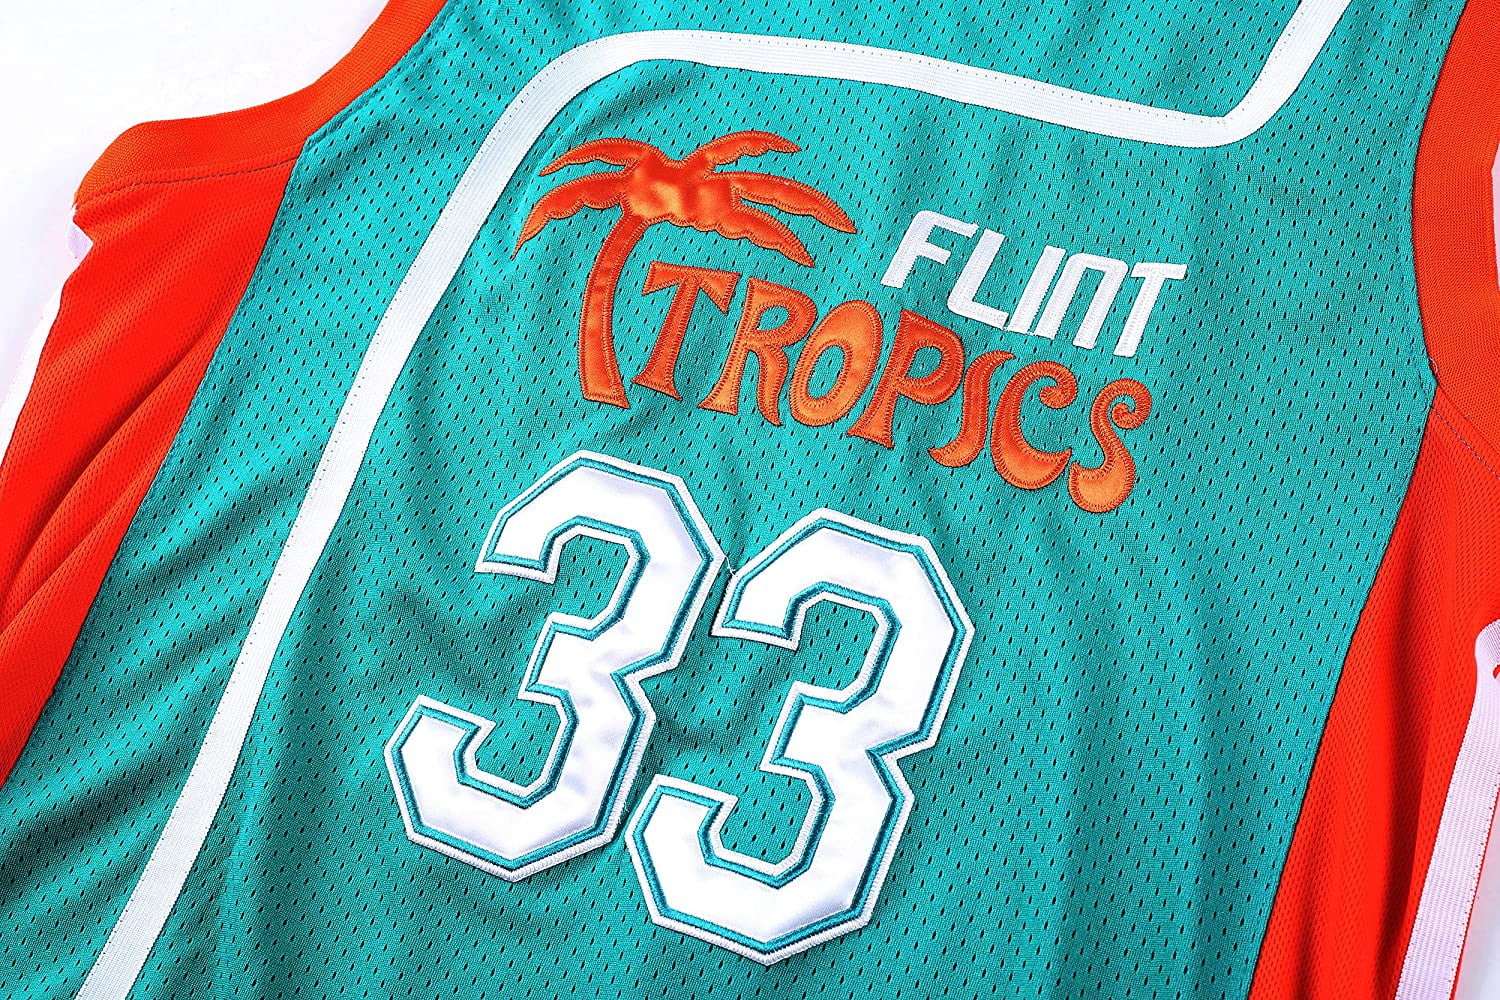  BOROLIN Mens Basketball Jersey #33 Jackie Moon Flint Tropics  90s Movie Shirts : Sports & Outdoors